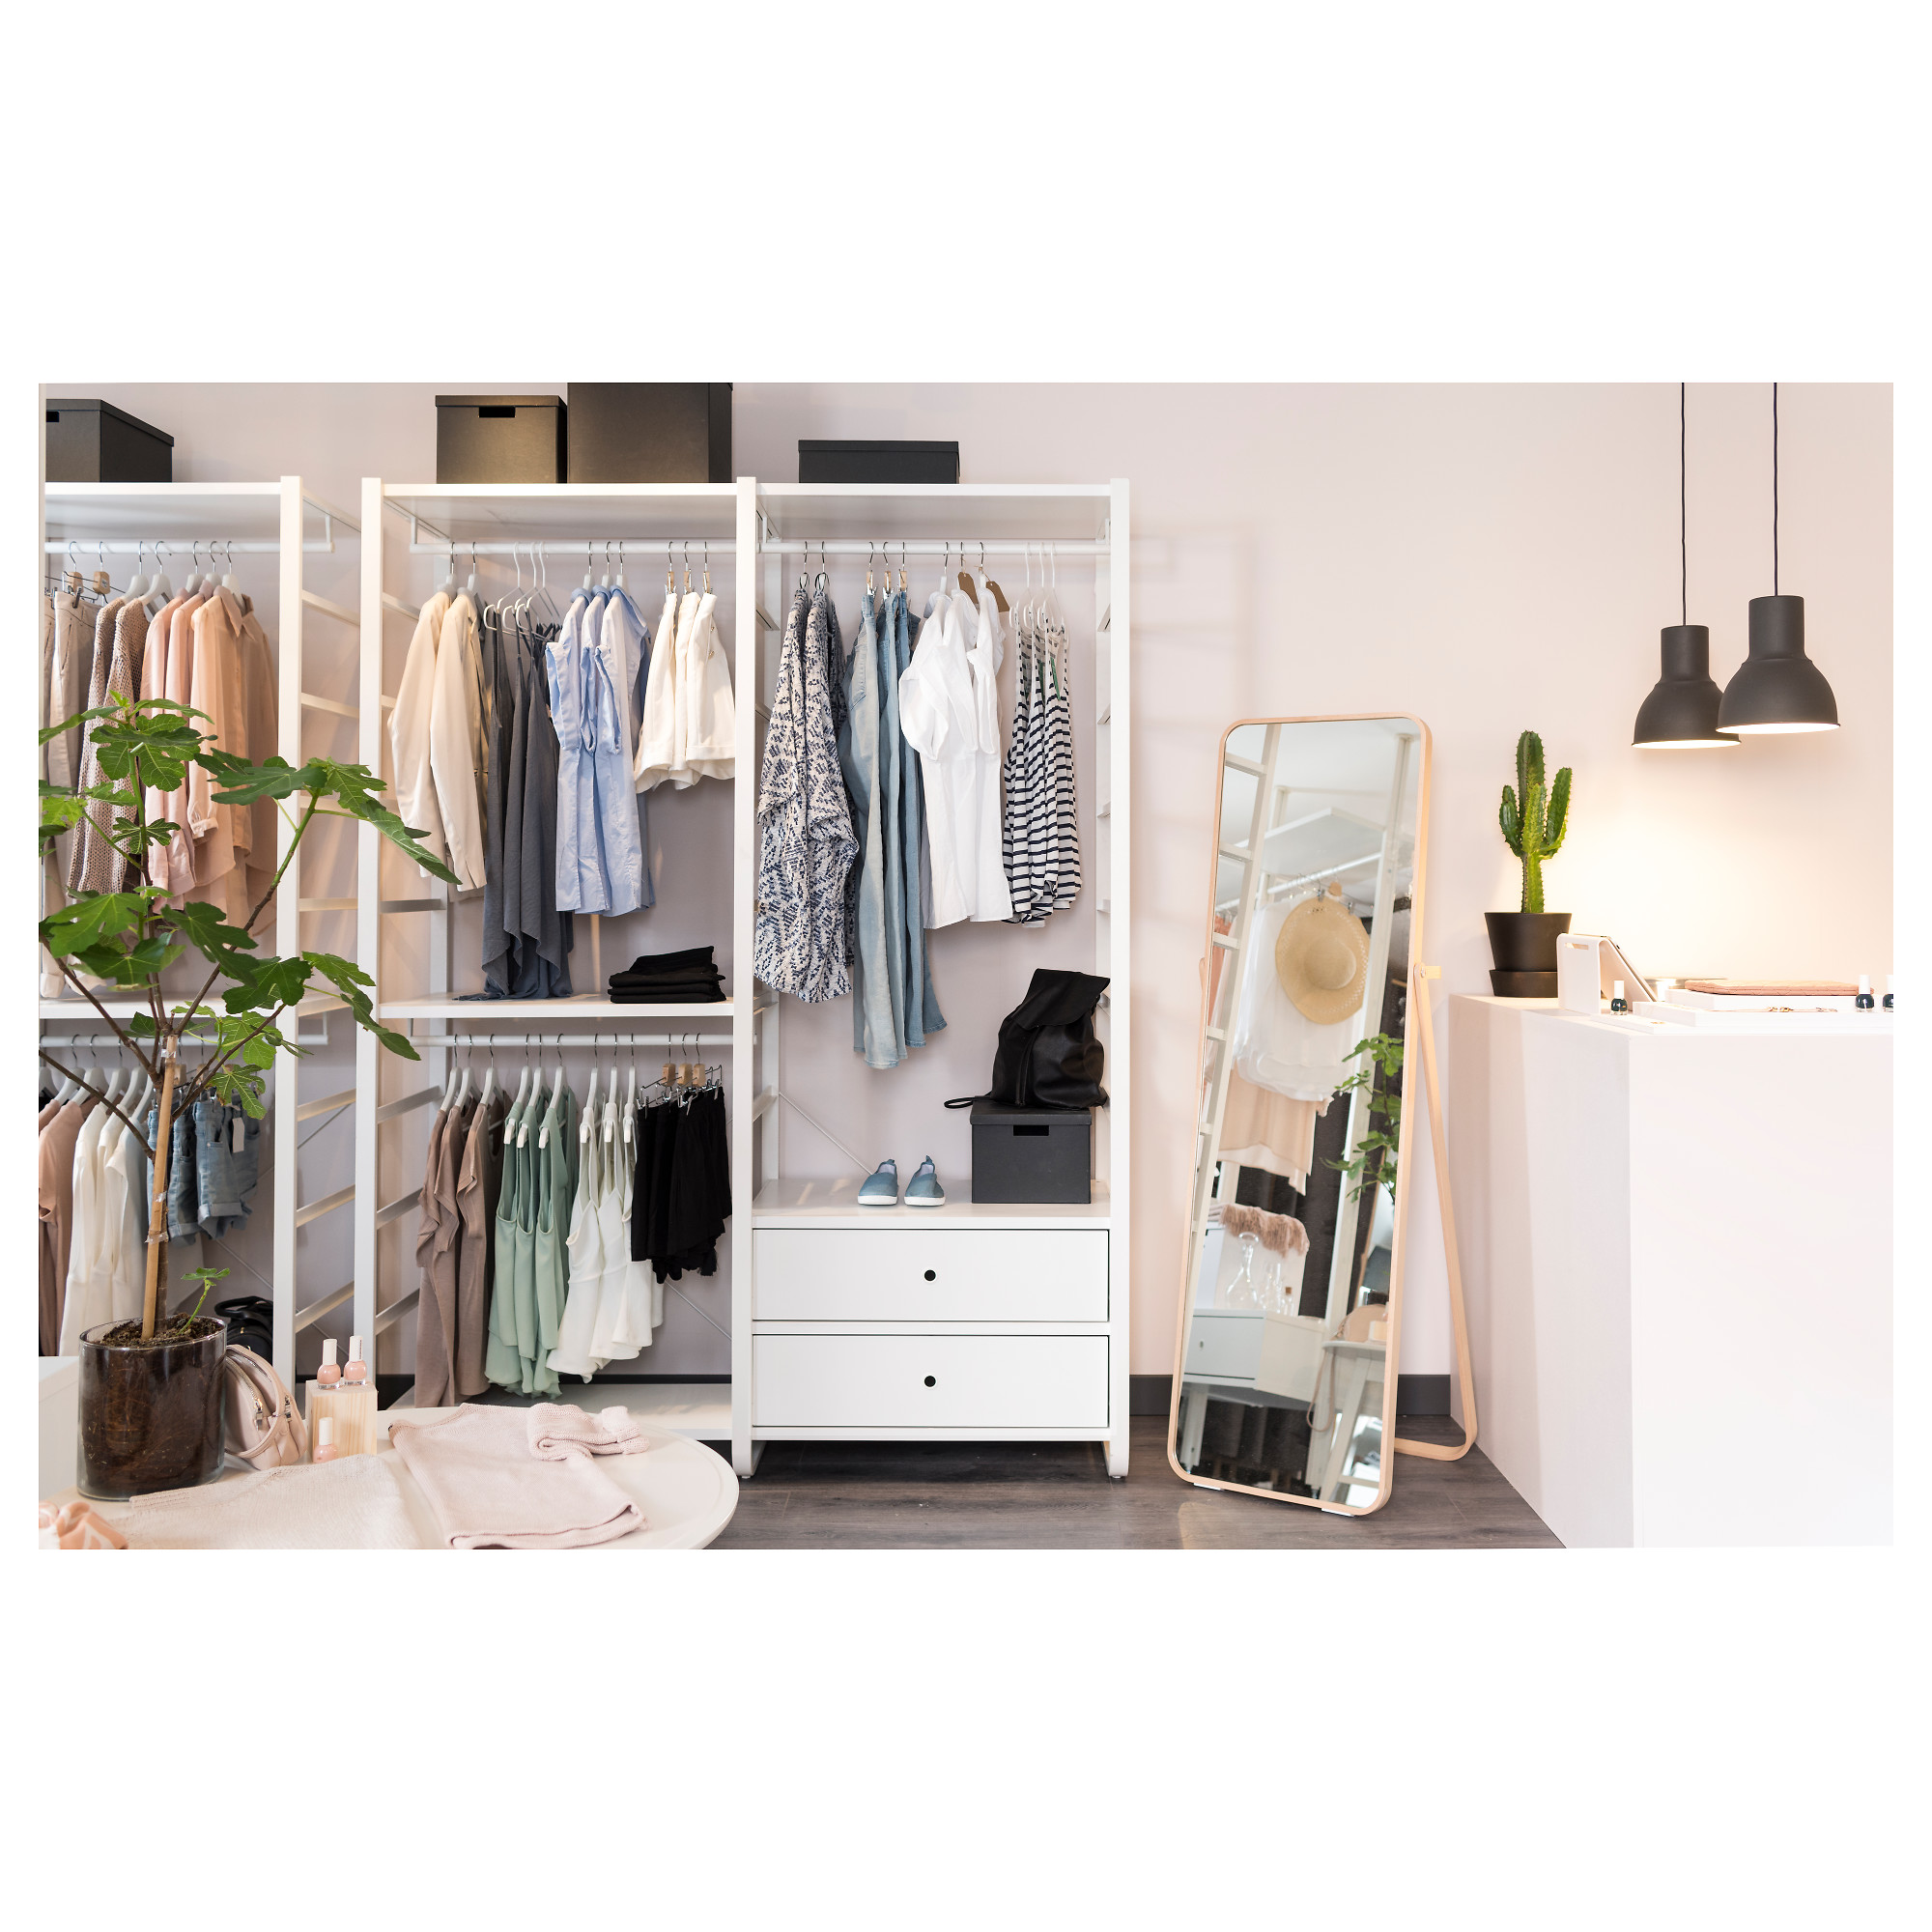 Elvarli IKEA Open Clothes Shoe Storages, - Komnit Furniture